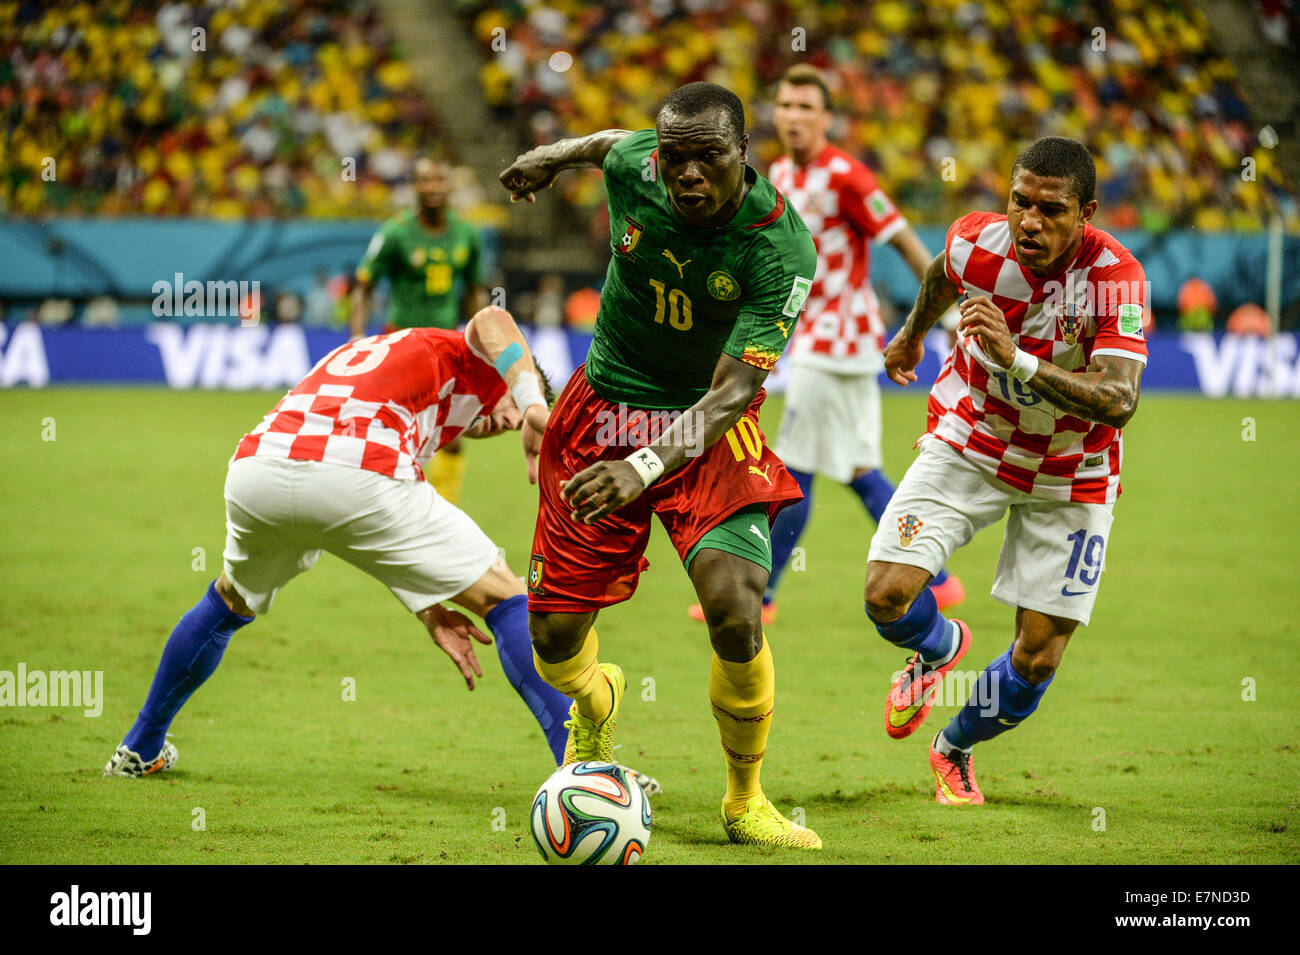 Vincent Aboubakar. Croatia v Cameroon. Group match. FIFA World Cup 2014 Brazil. Arena Amazonia, Manaus. 18 Jun 2014. Stock Photo